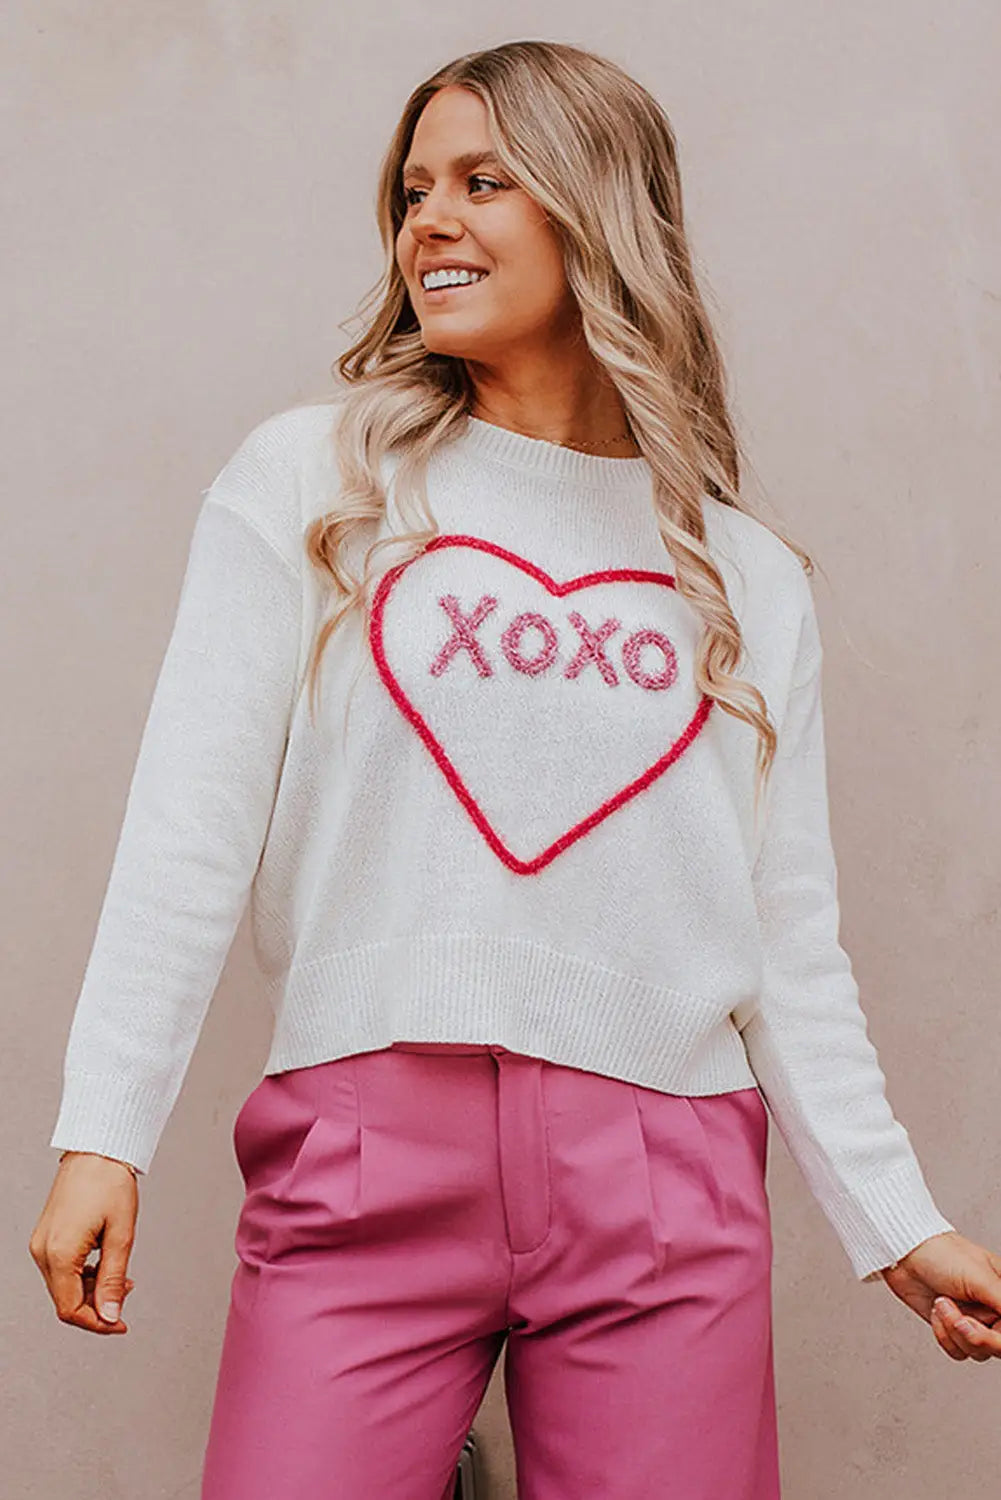 Rose heart xoxo pattern drop shoulder rib knit sweater - sweaters & cardigans